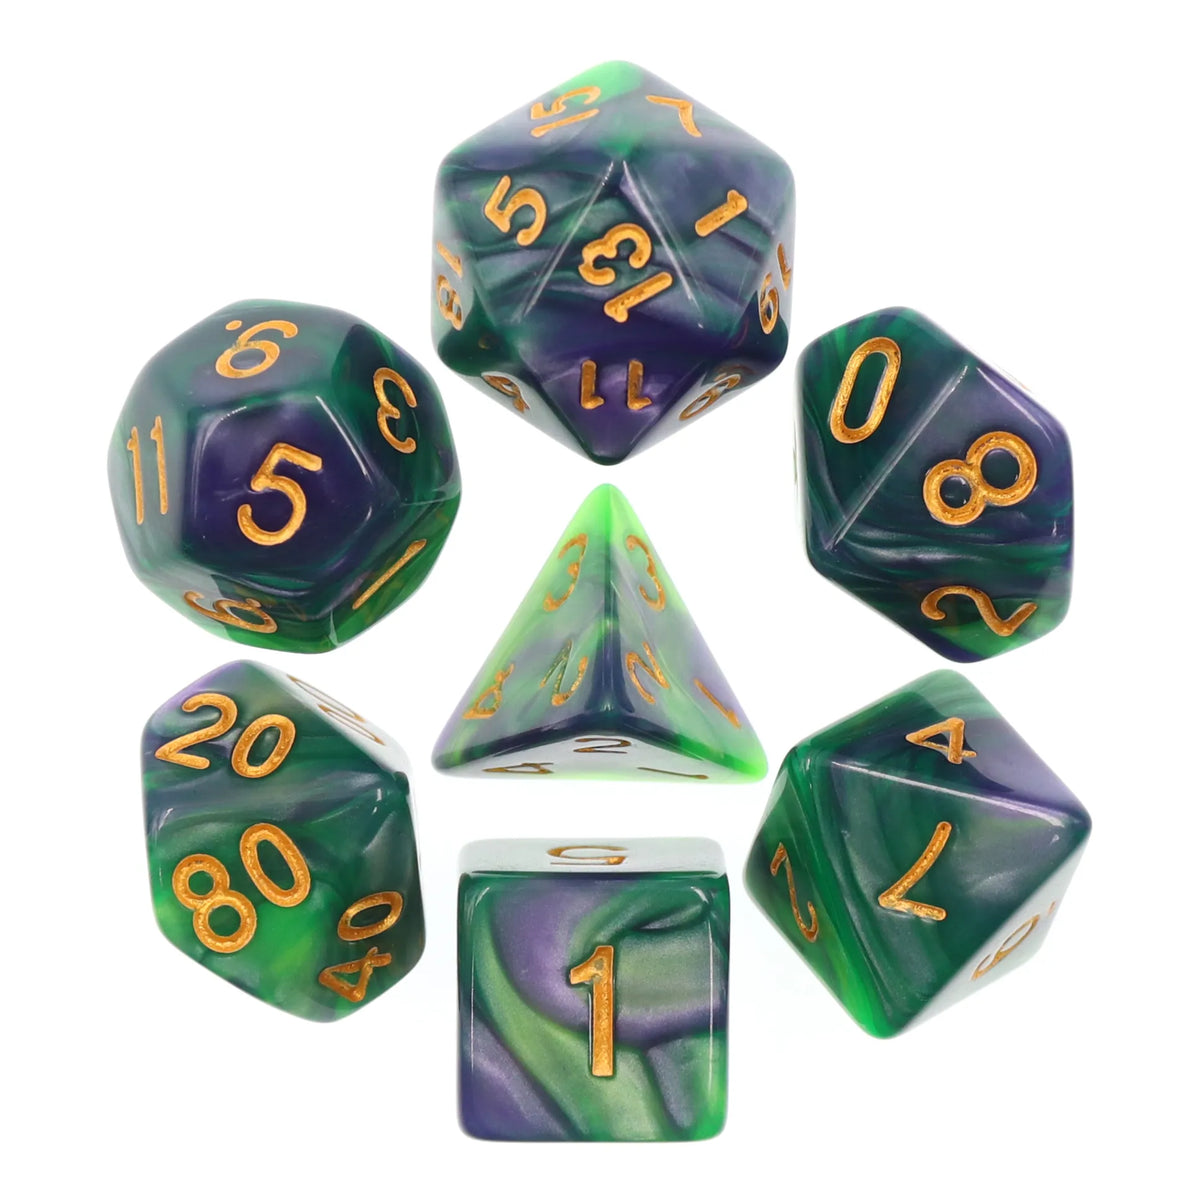 (Green+purple)   
Blend color dice